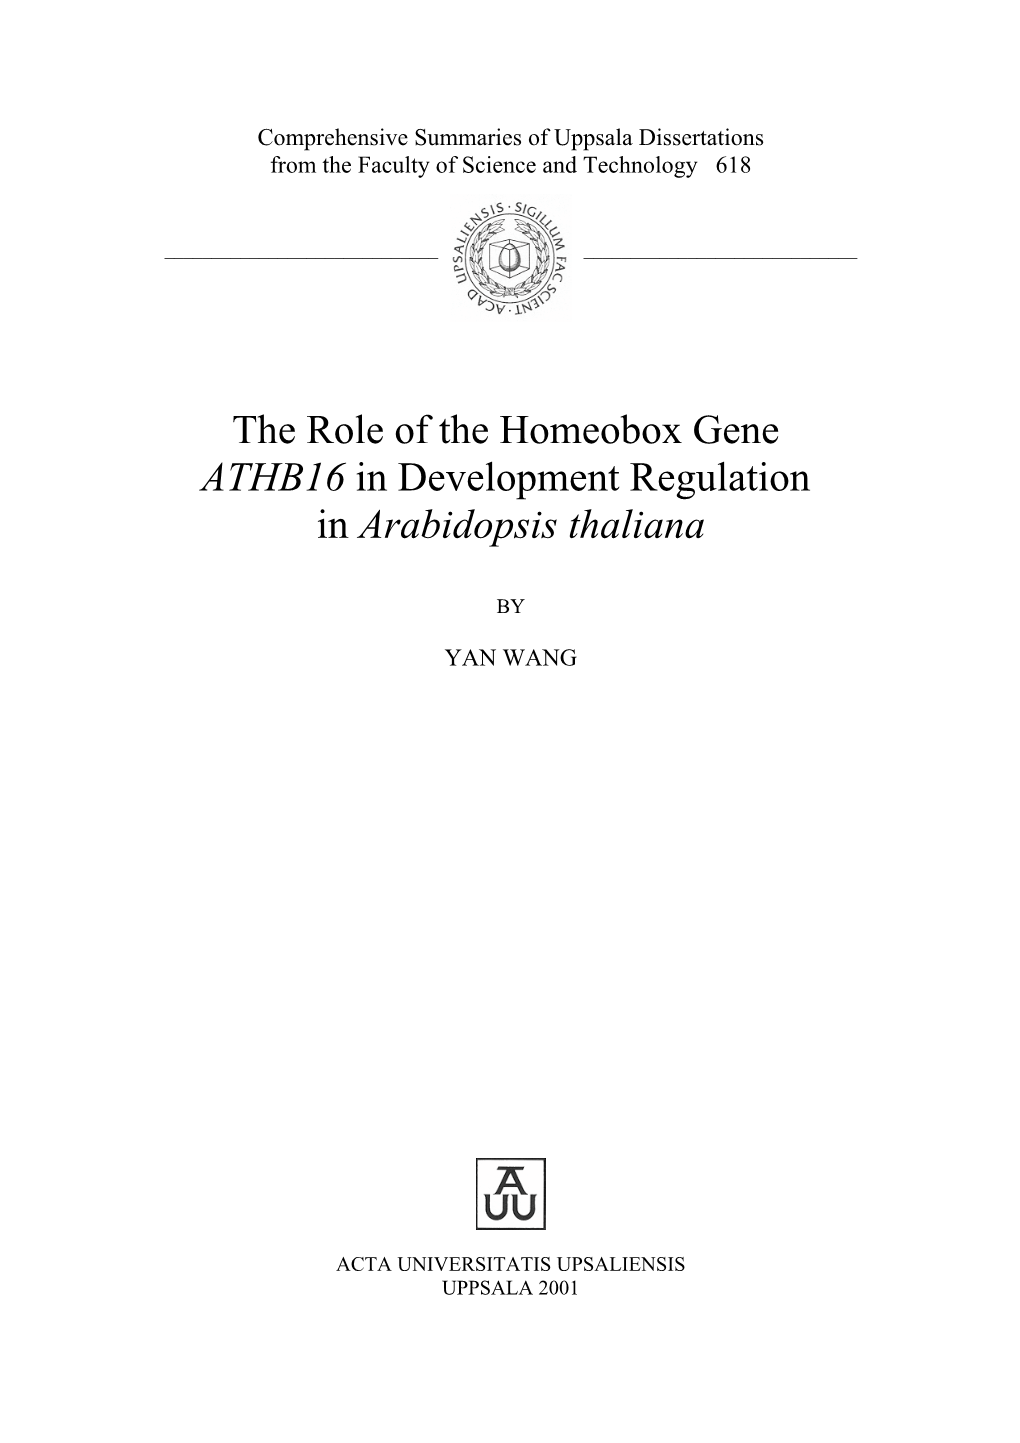 The Role of the Homeobox Gene ATHB16 in Development Regulation in Arabidopsis Thaliana